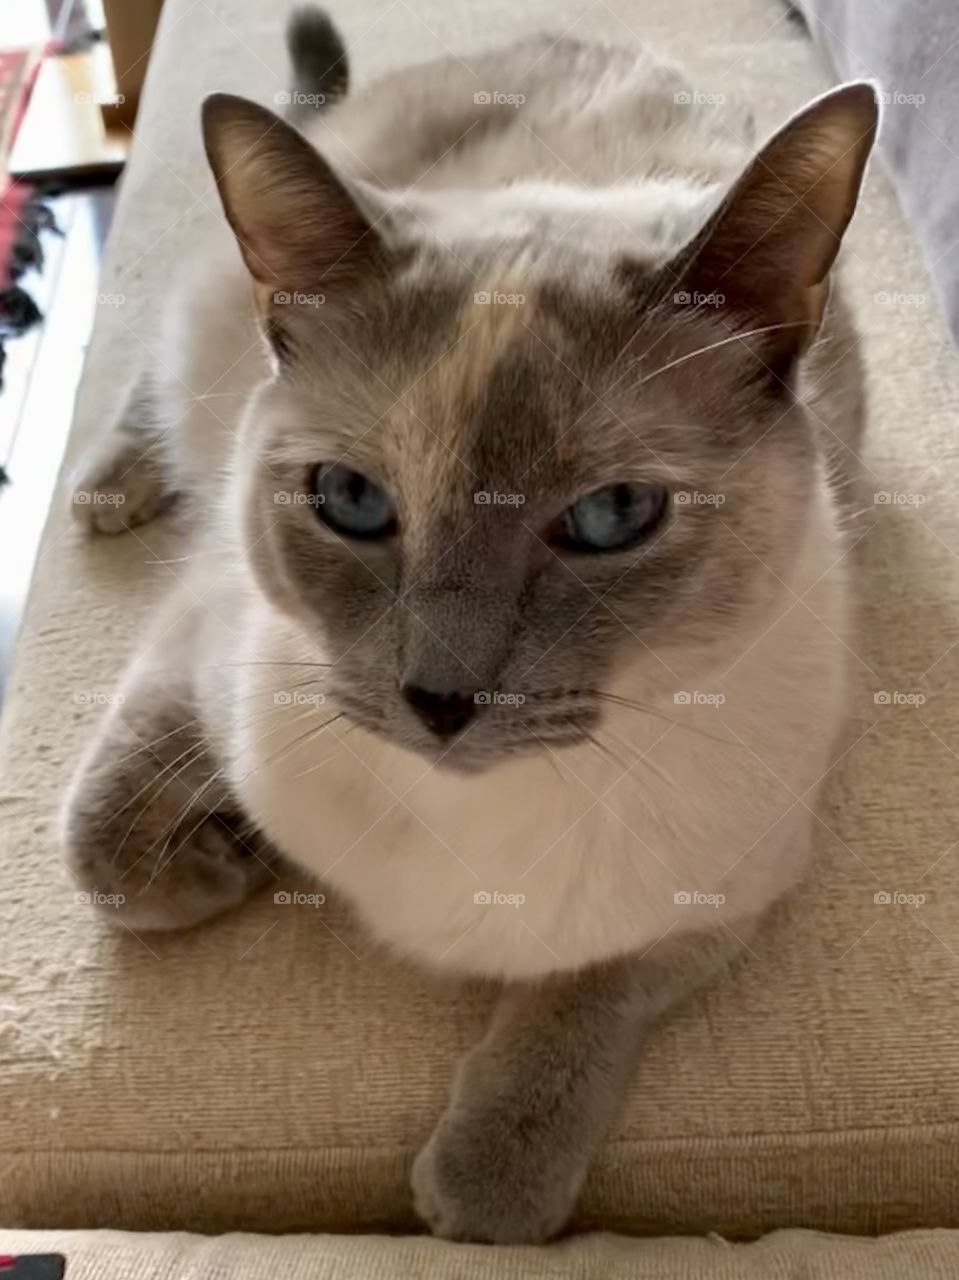 Our other semi Siamese cat posing - Zara